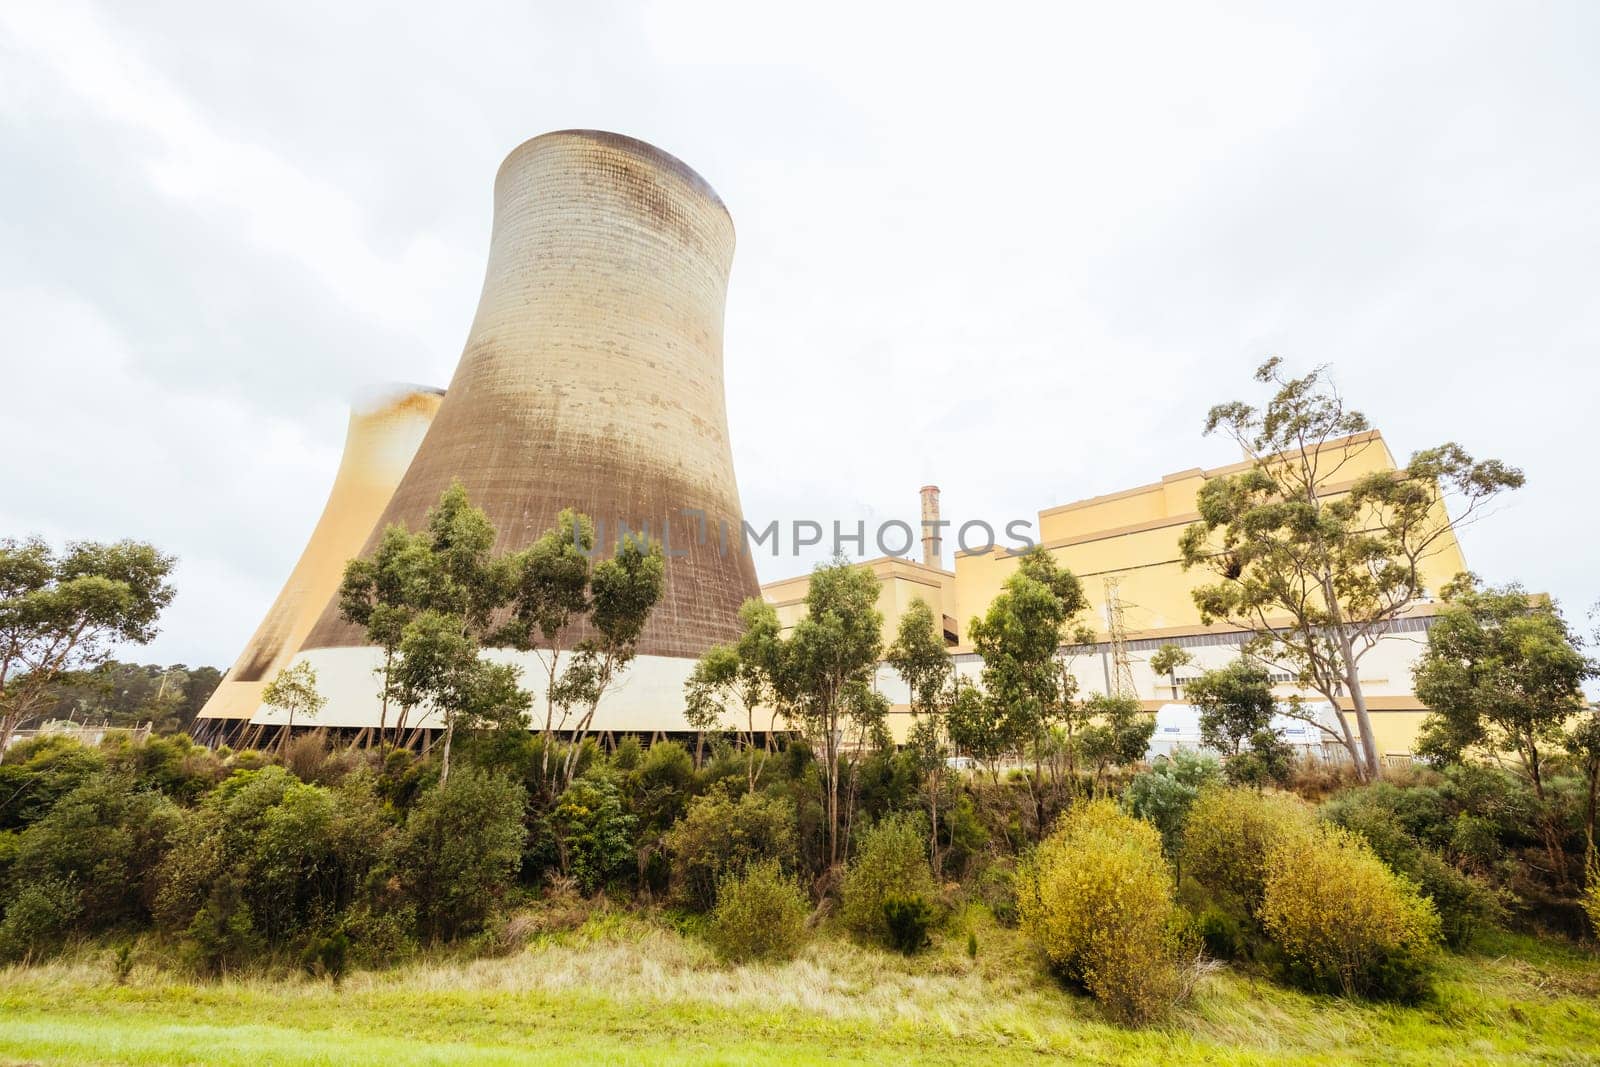 Yallourn Power Station in Australia by FiledIMAGE